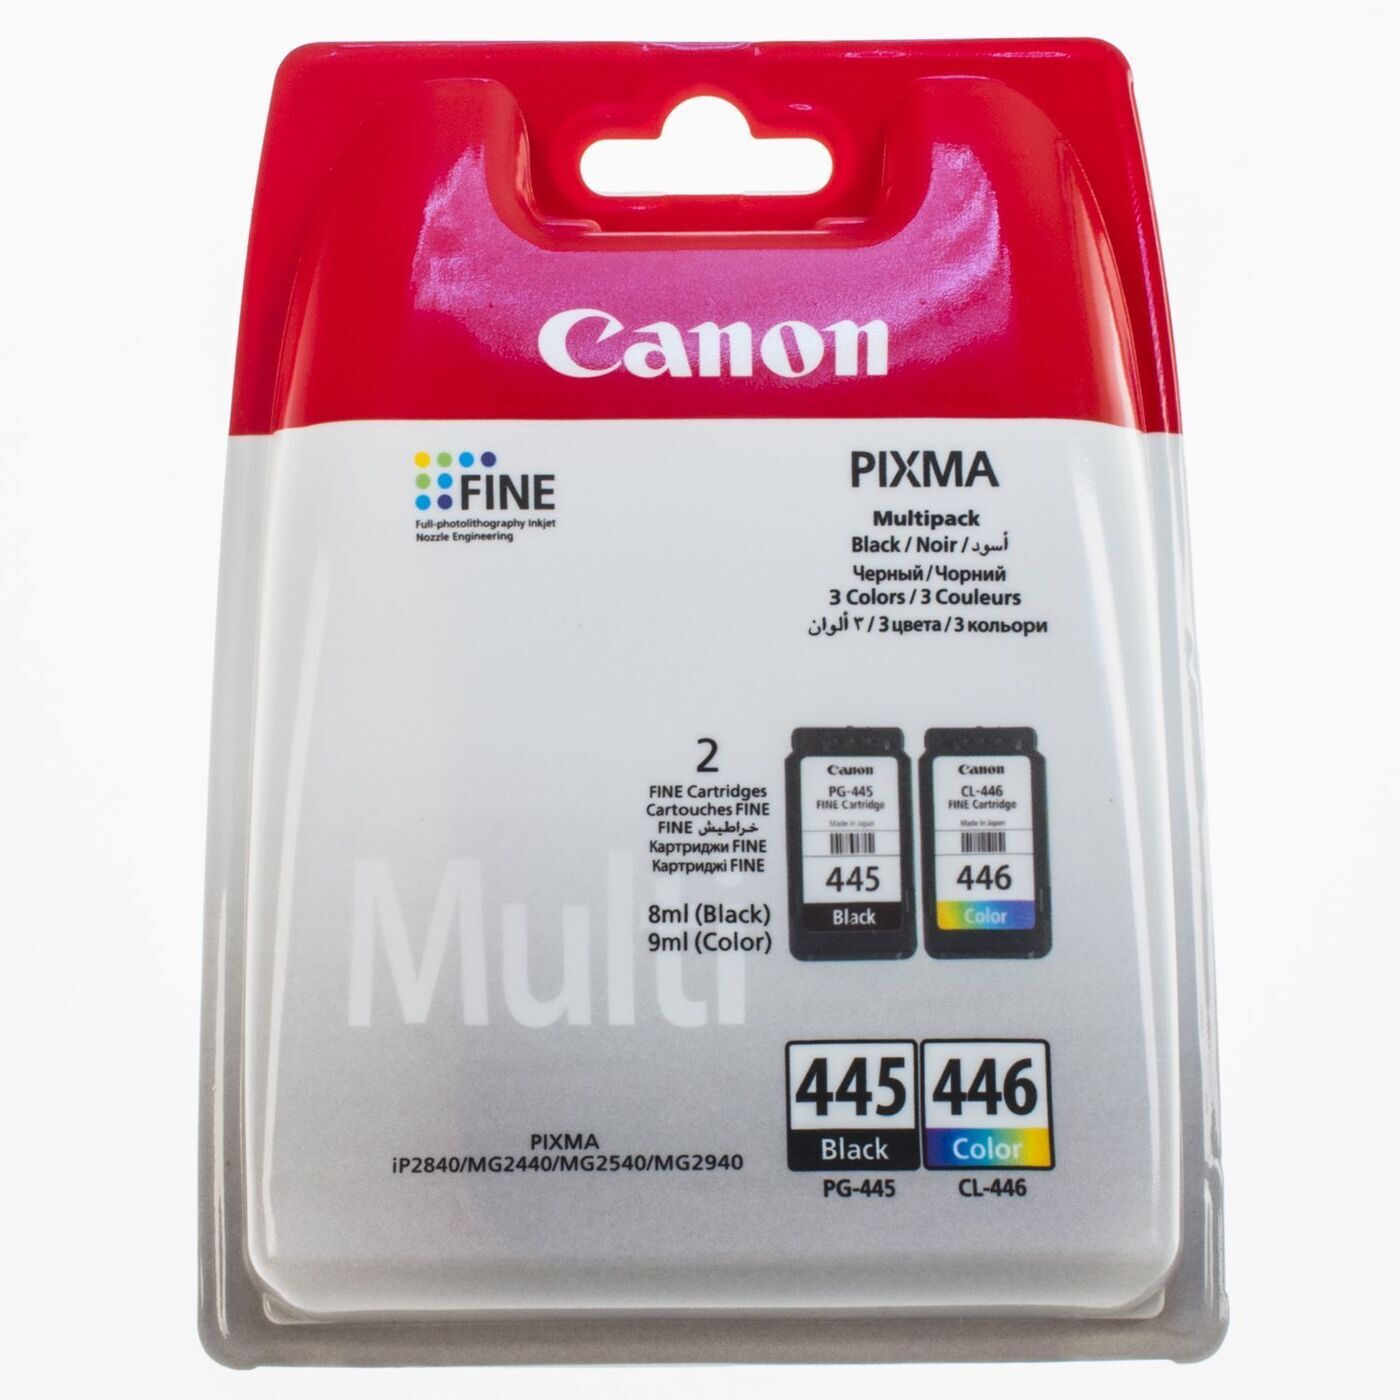 Canon pixma 445. Картридж для принтера Canon PIXMA 446. Картридж Canon PG-445 для mg2540. Принтер Canon PIXMA PG-445. Картридж Canon PG-445/CL-446.